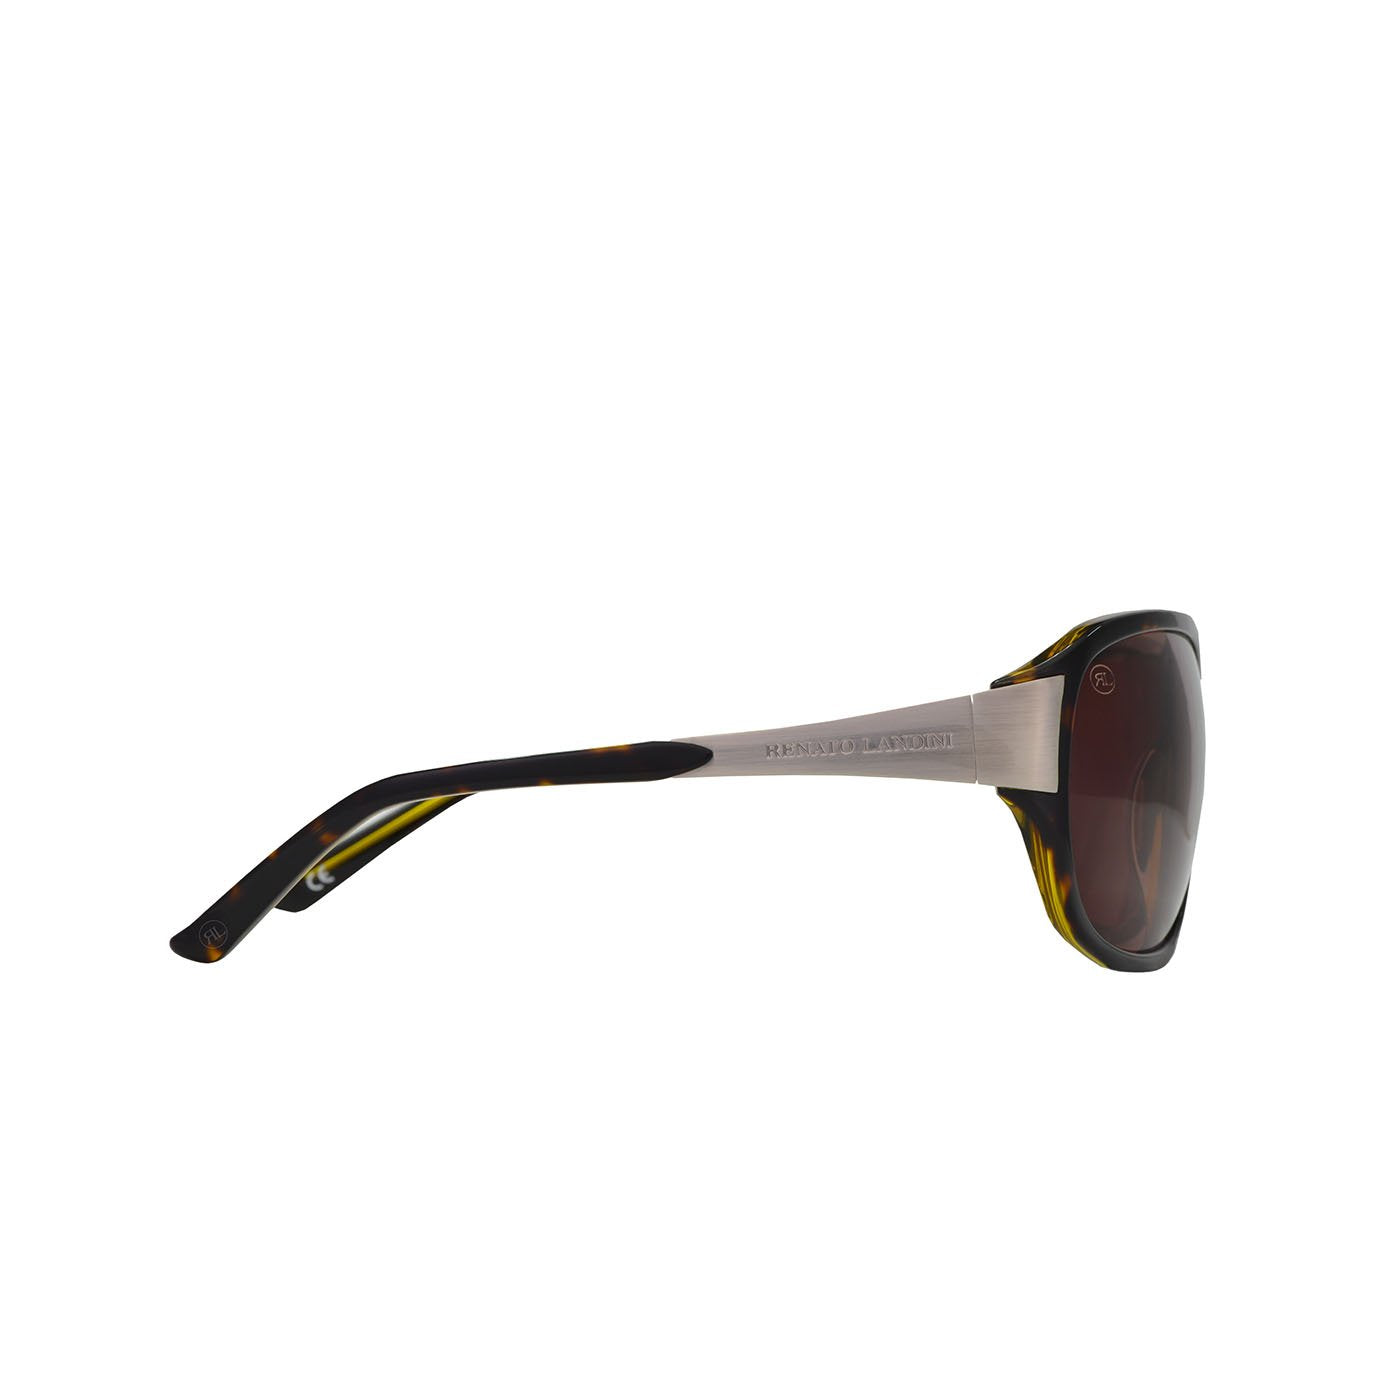 RENATO LANDINI Men's Sunglasses Brown/ Oceanic